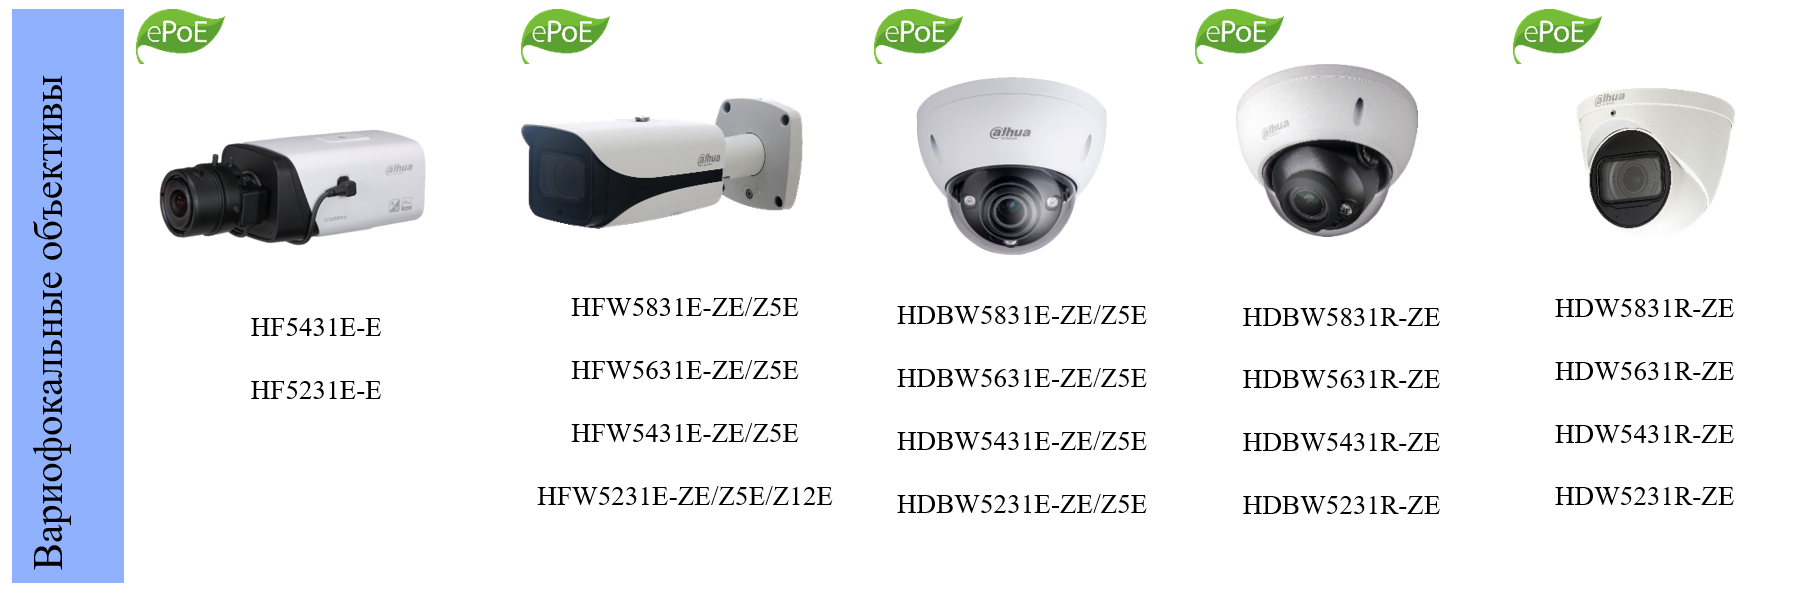 Мережеві камери Dahua серії ePoE 